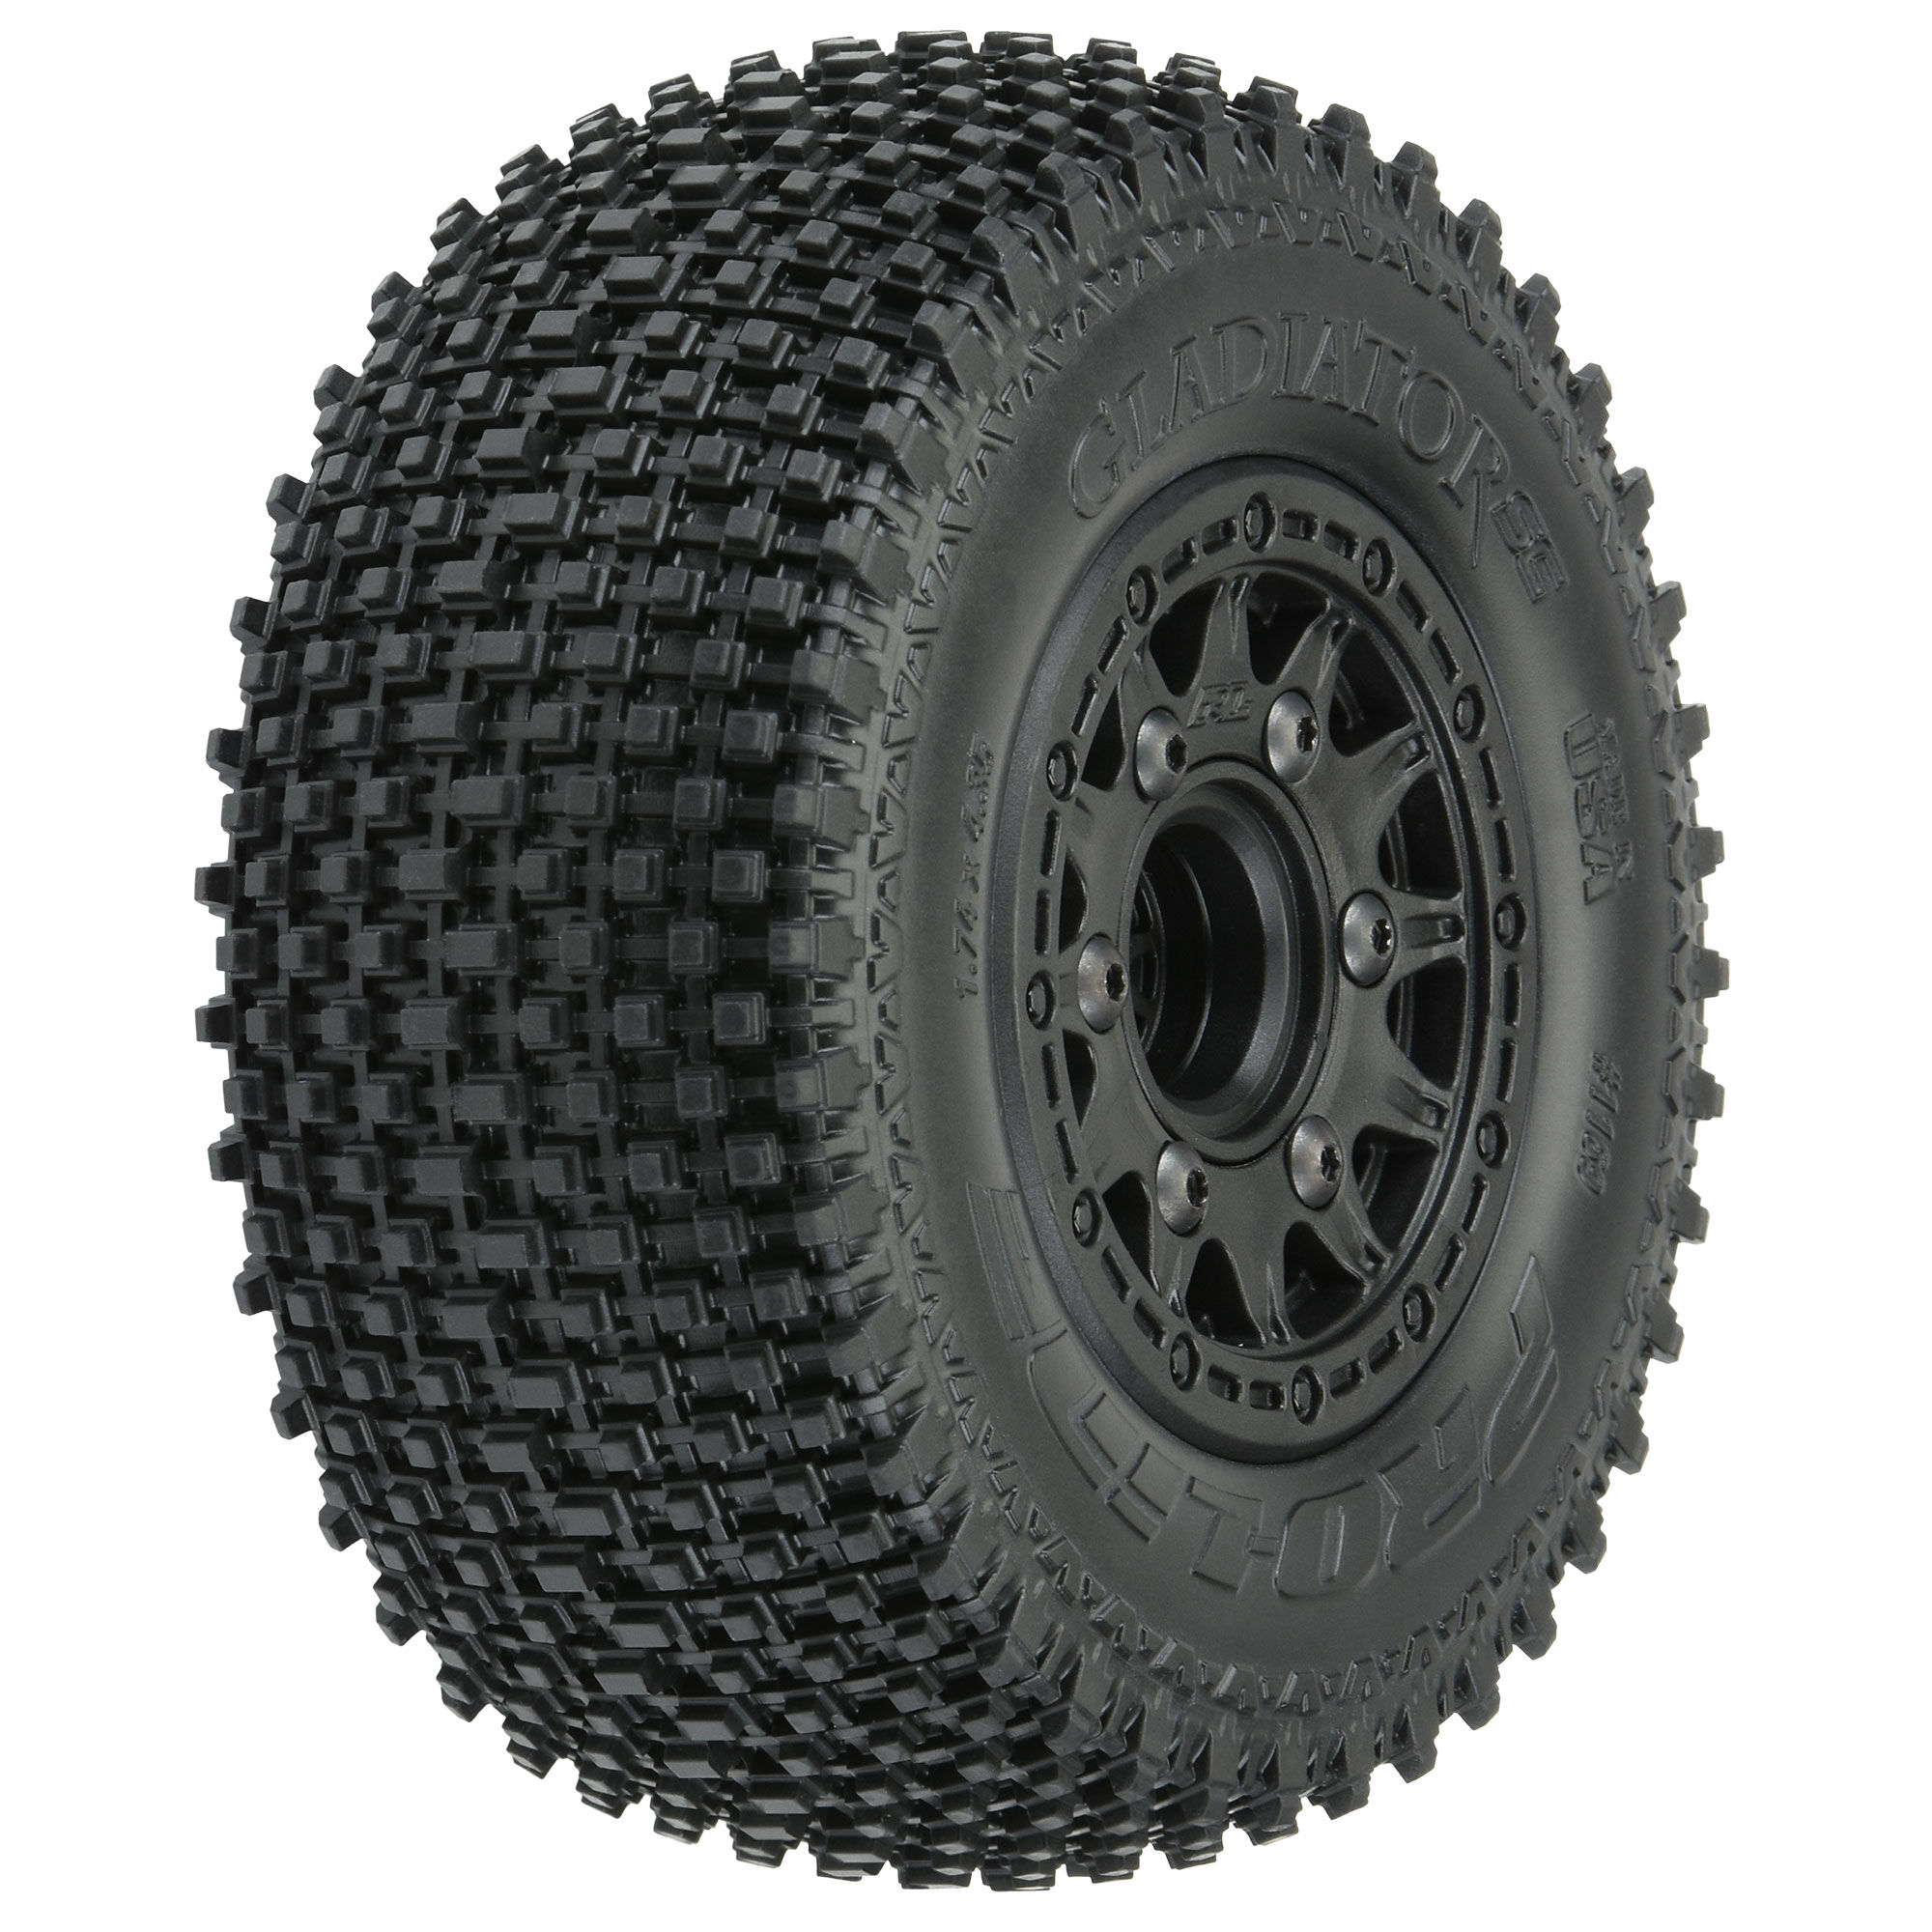 PROLINE 118325 Blockade SC 2.2/3.0 M3 Soft Tires On F-11 Wheels for SCTE4X4SC10Rs 2Wd/SC10 4X4 Black 